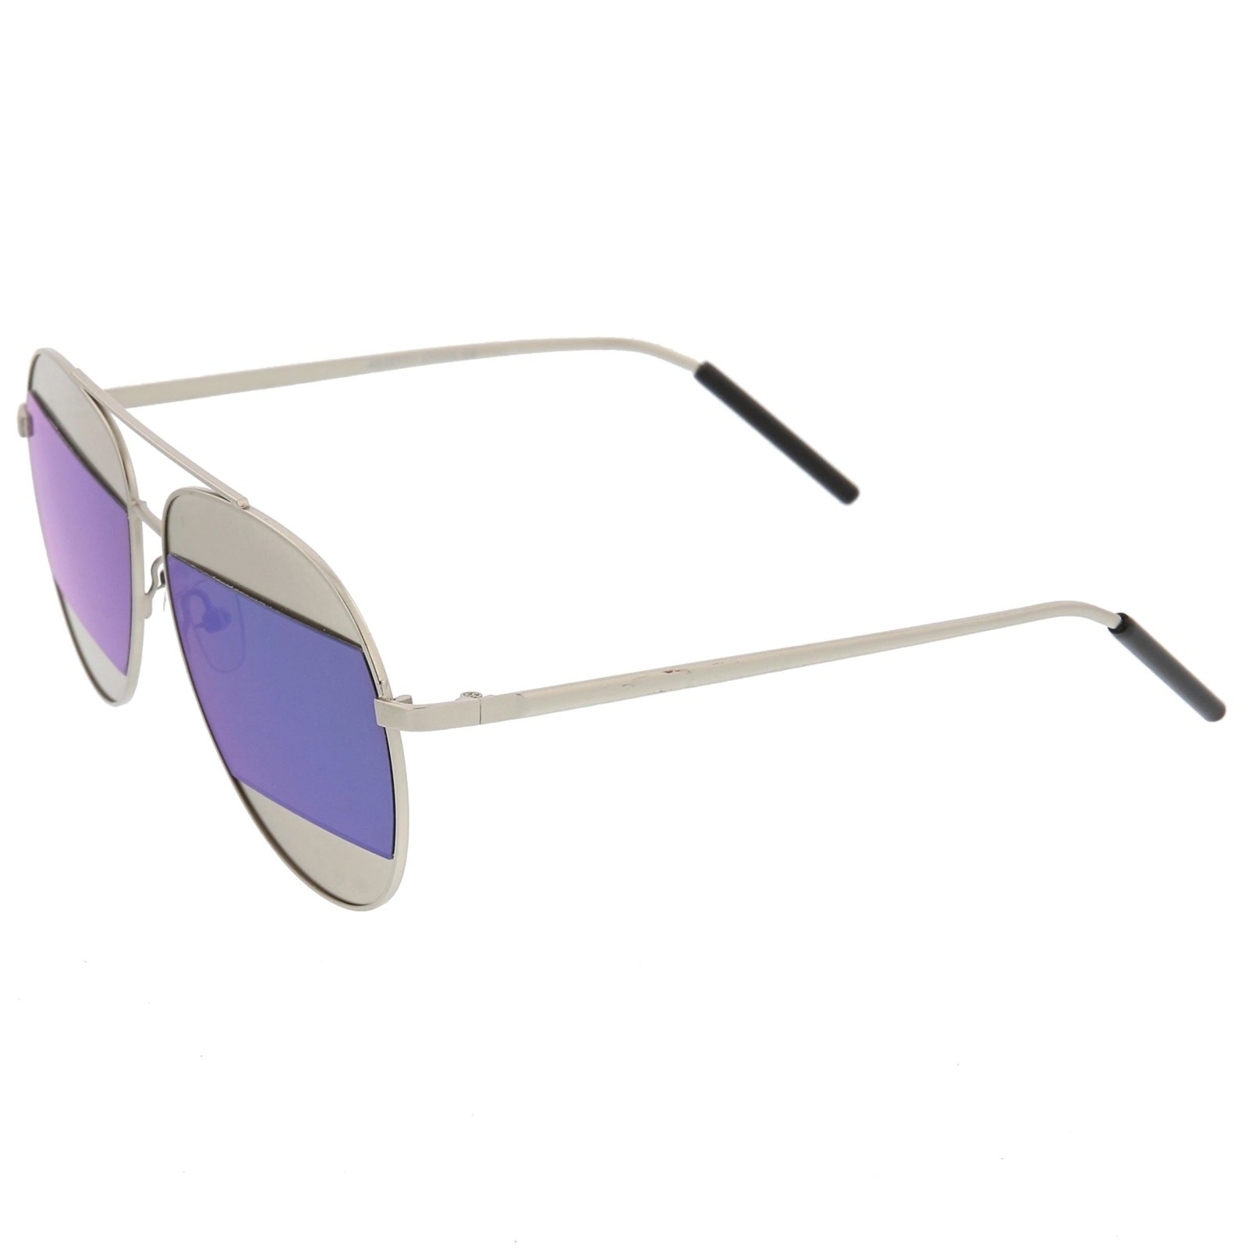 Two-Toned Matte Metal Brow Bar Color Split Mirror Lens Aviator Sunglasses 57mm - Silver / Purple Mirror